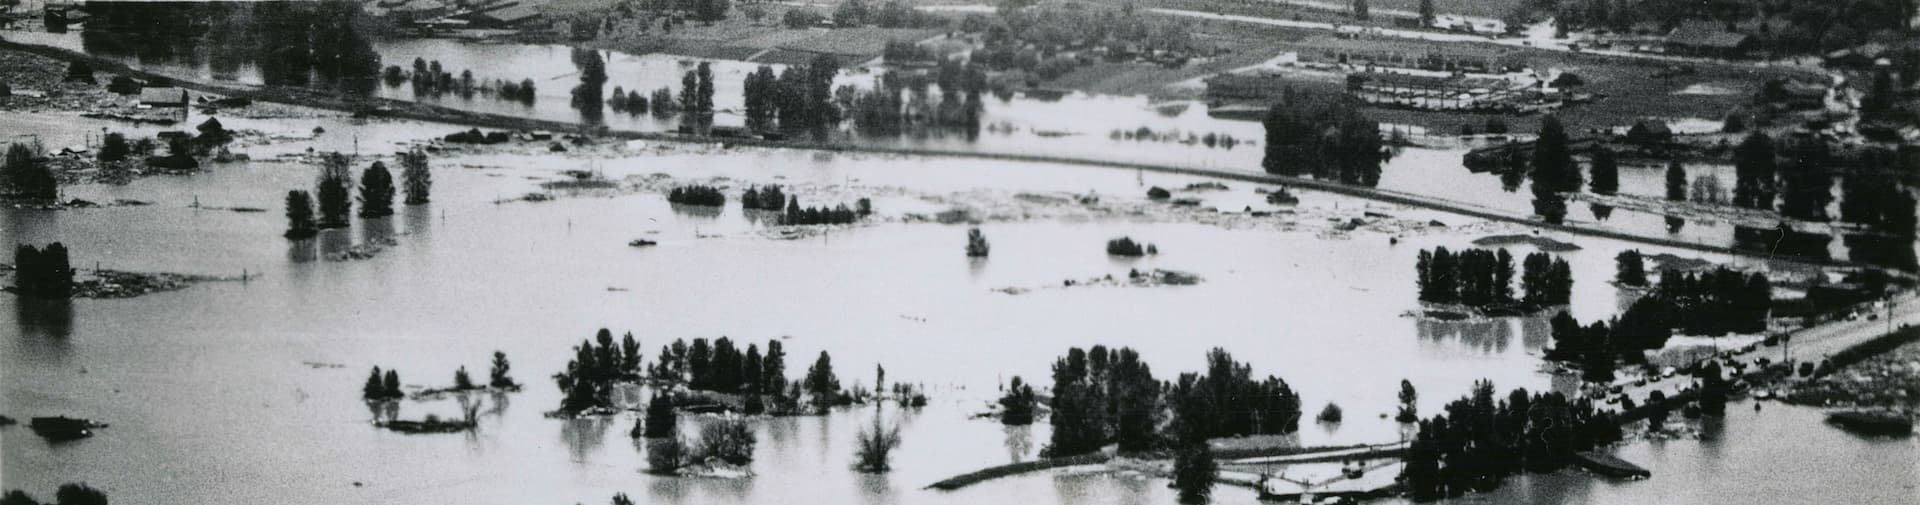 Vanport flood 1948